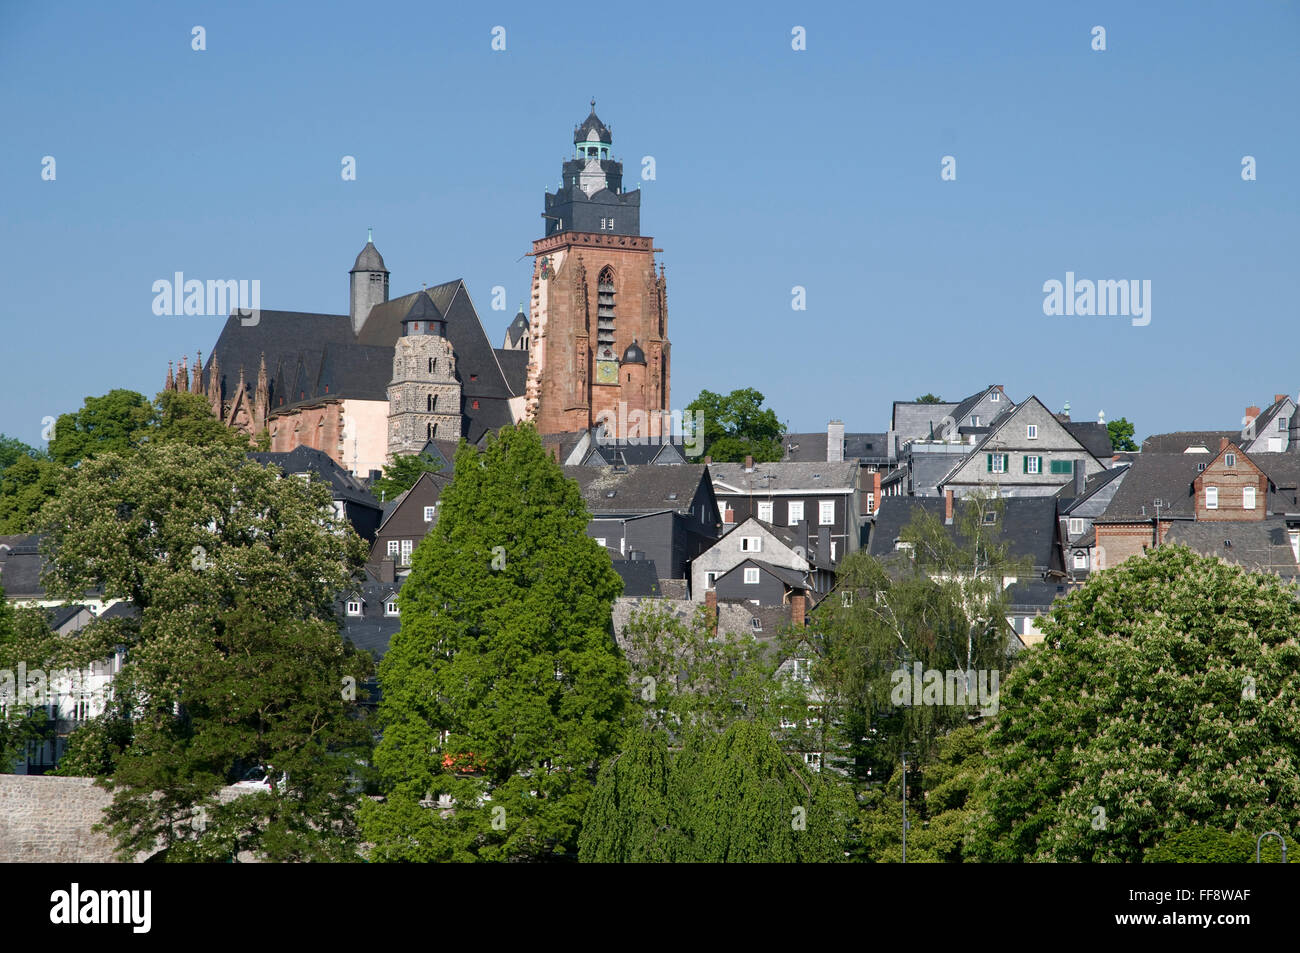 Altstadt von Wetzlar mit Dom, Assia, Deutschland | città vecchia di Wetzlar e cattedrale, Hesse, Germania Foto Stock